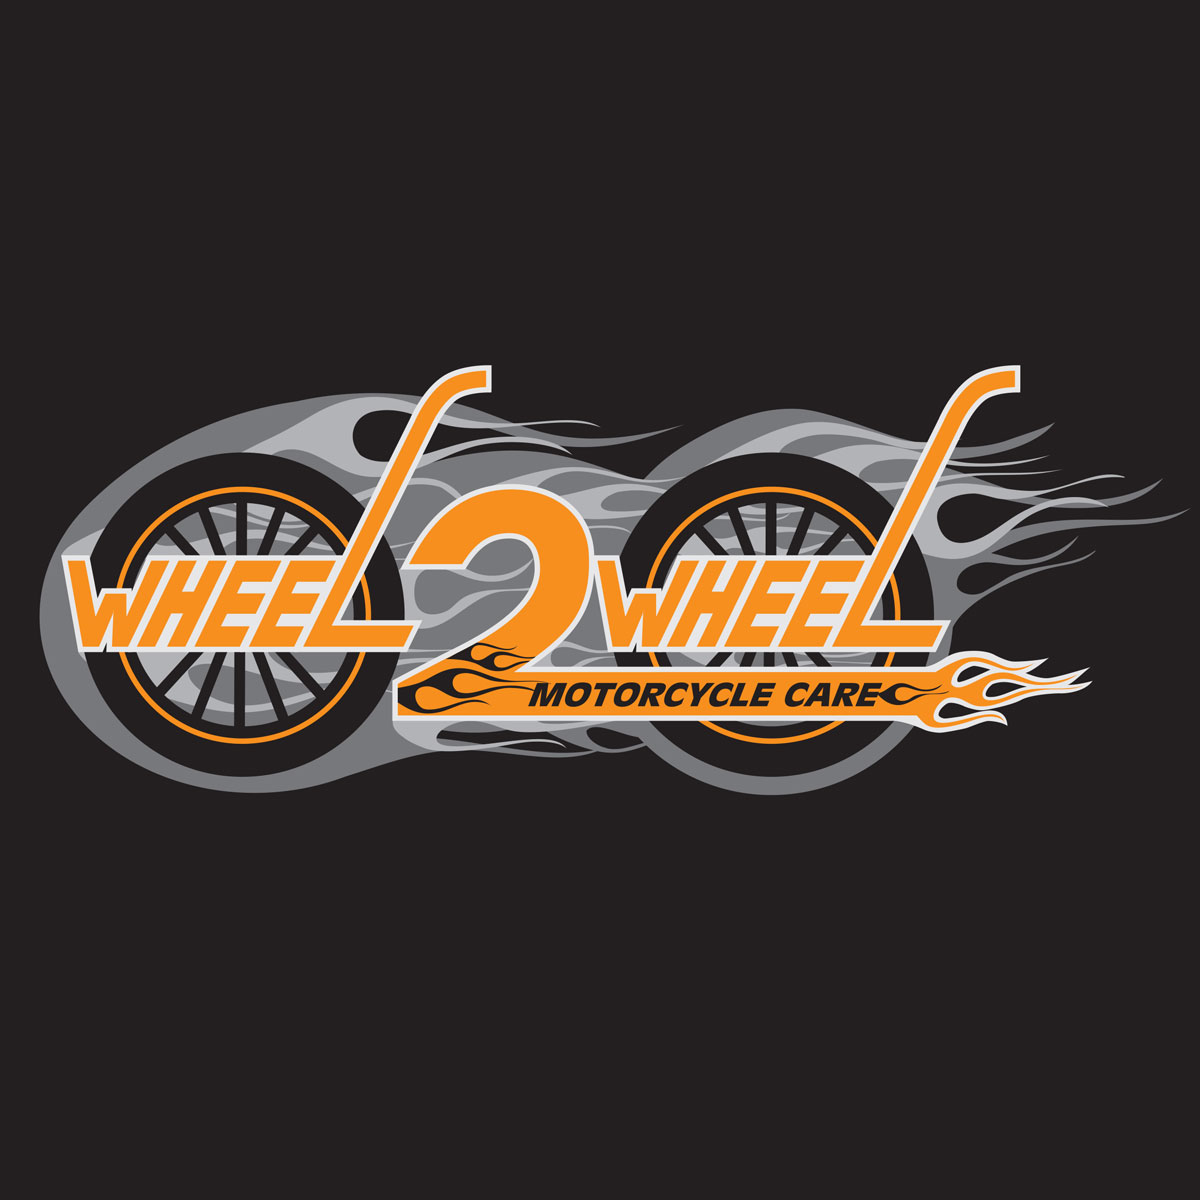 Wheel 2 Wheel logo